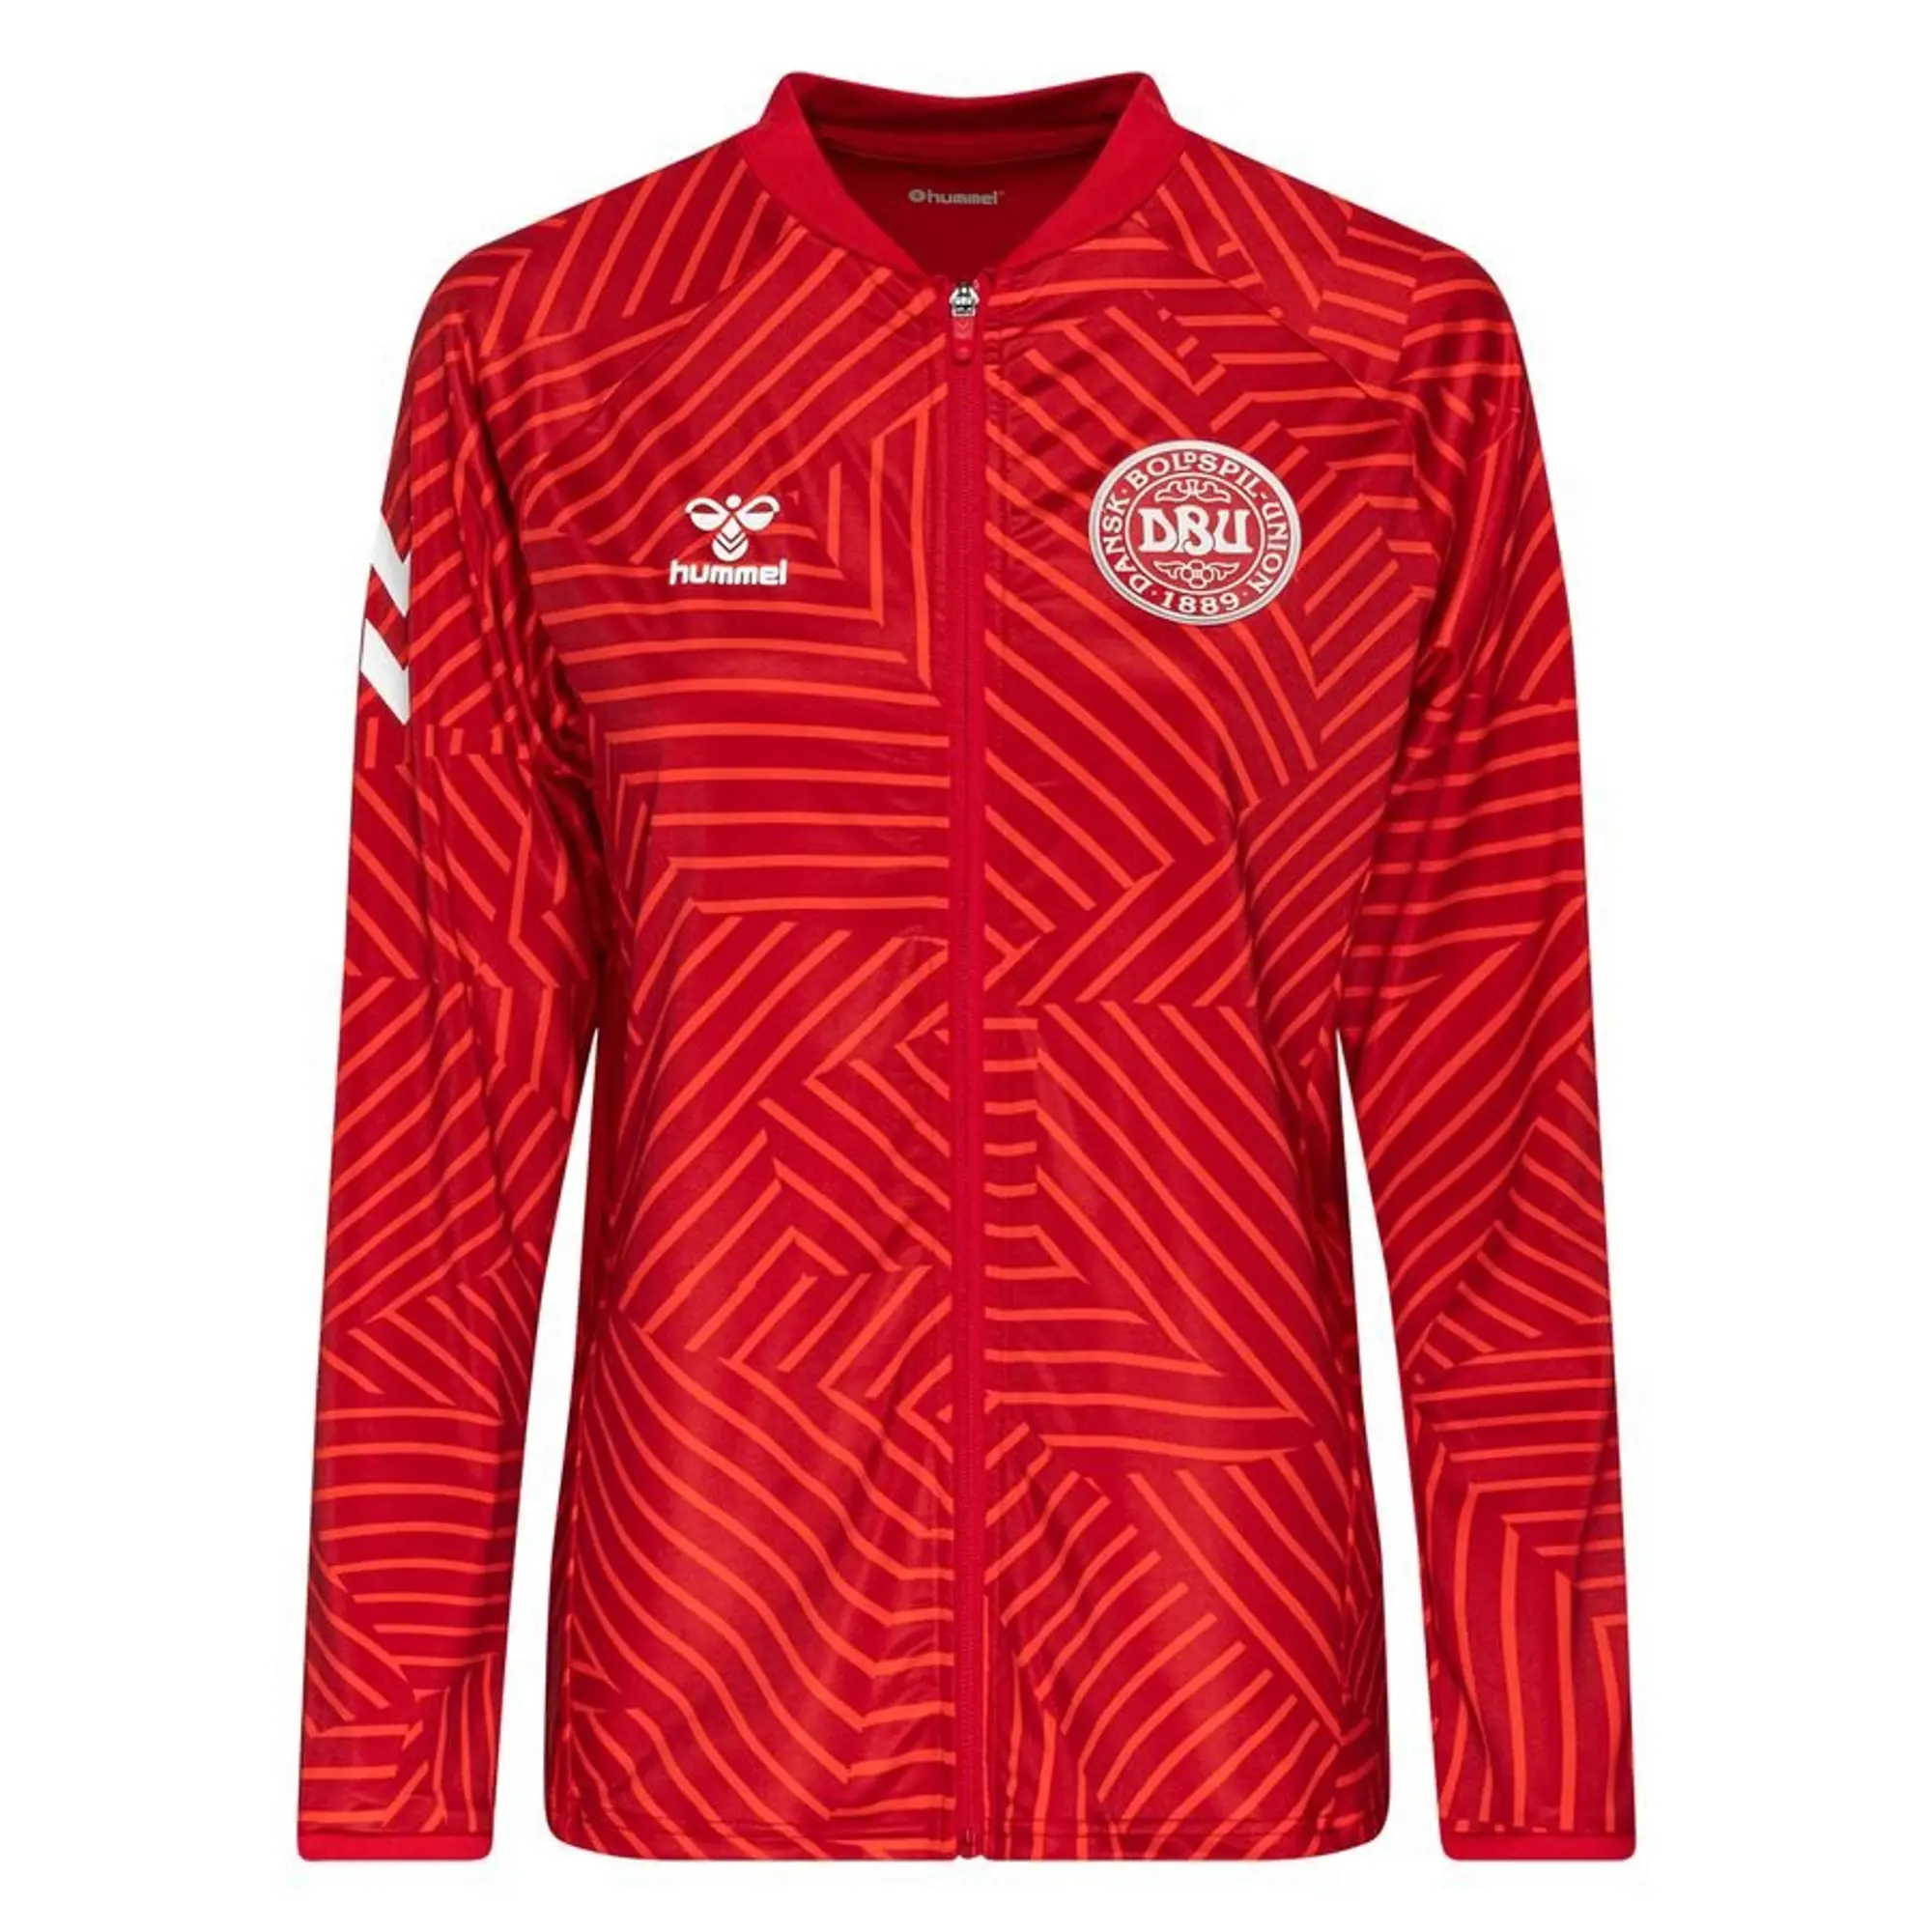 Hummel Denmark Training Jacket Line Up Women's Euro 2022 - Tango Red Woman - Red